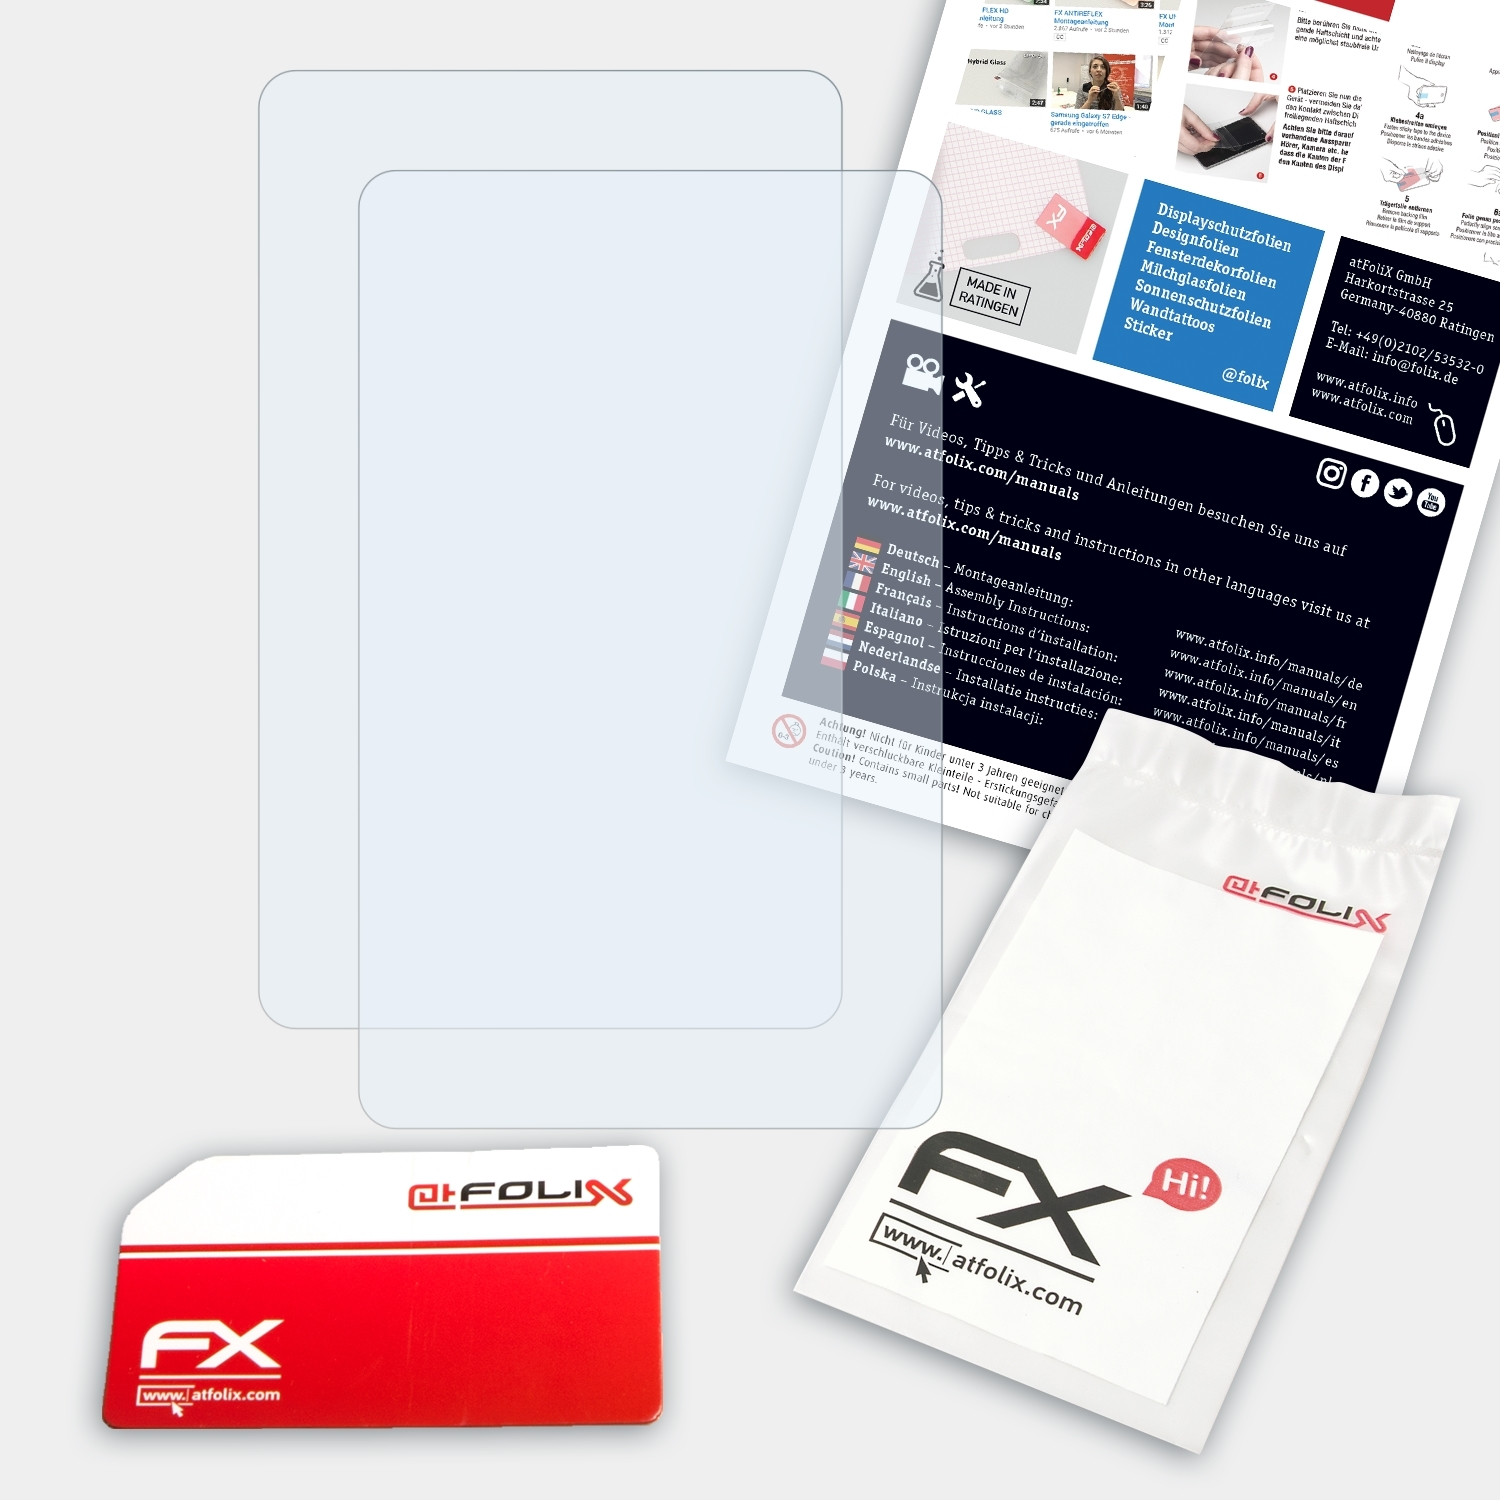 ATFOLIX 2x FX-Clear A50S) Displayschutz(für Pax